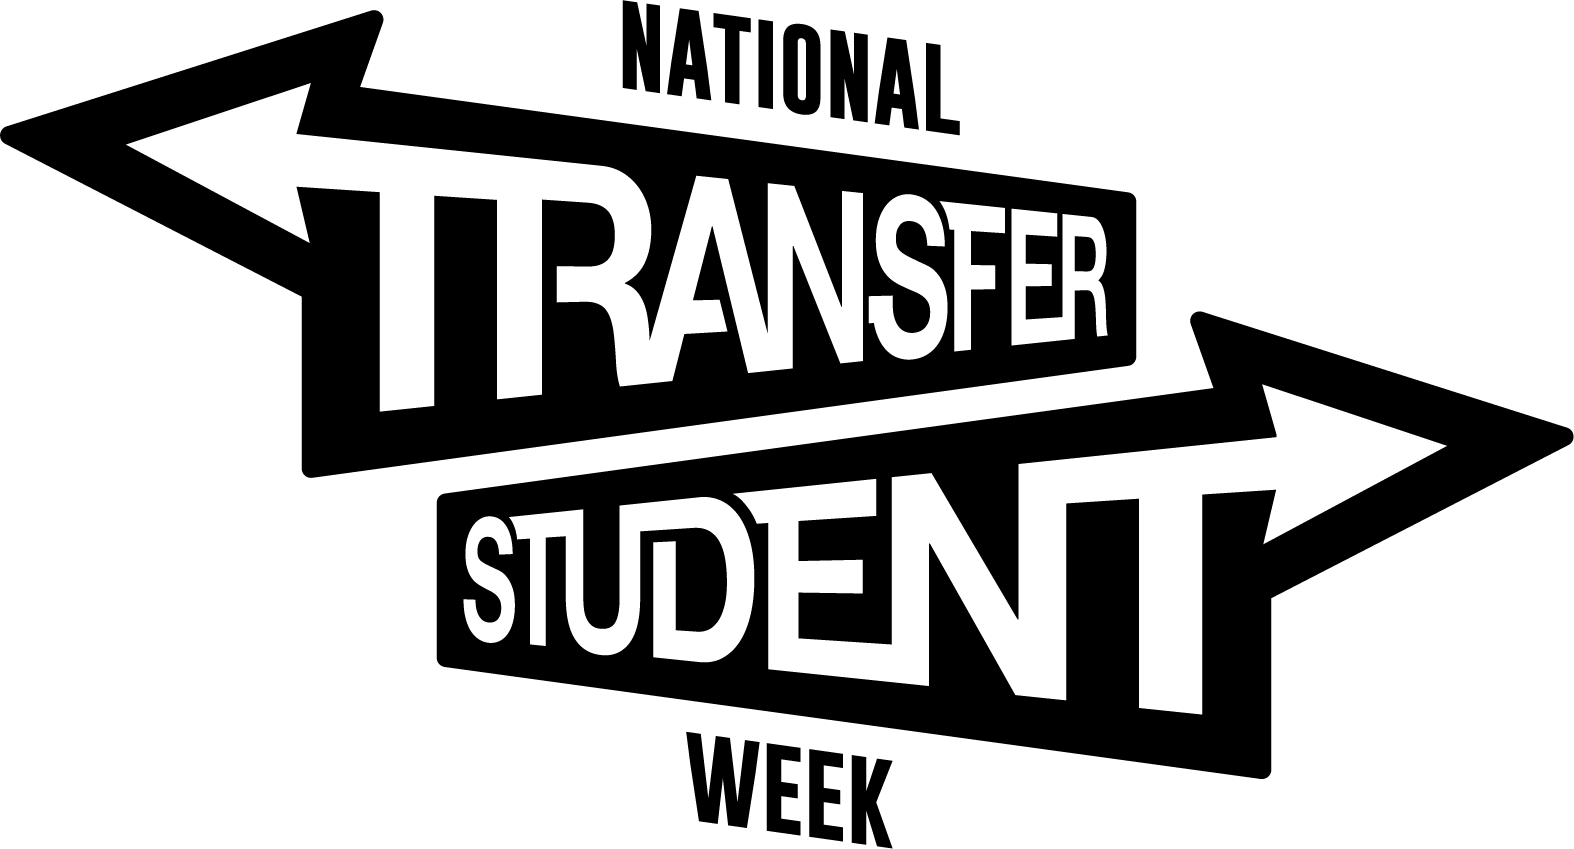 Transfer Logo - West Texas A&M University: National Transfer Student Week